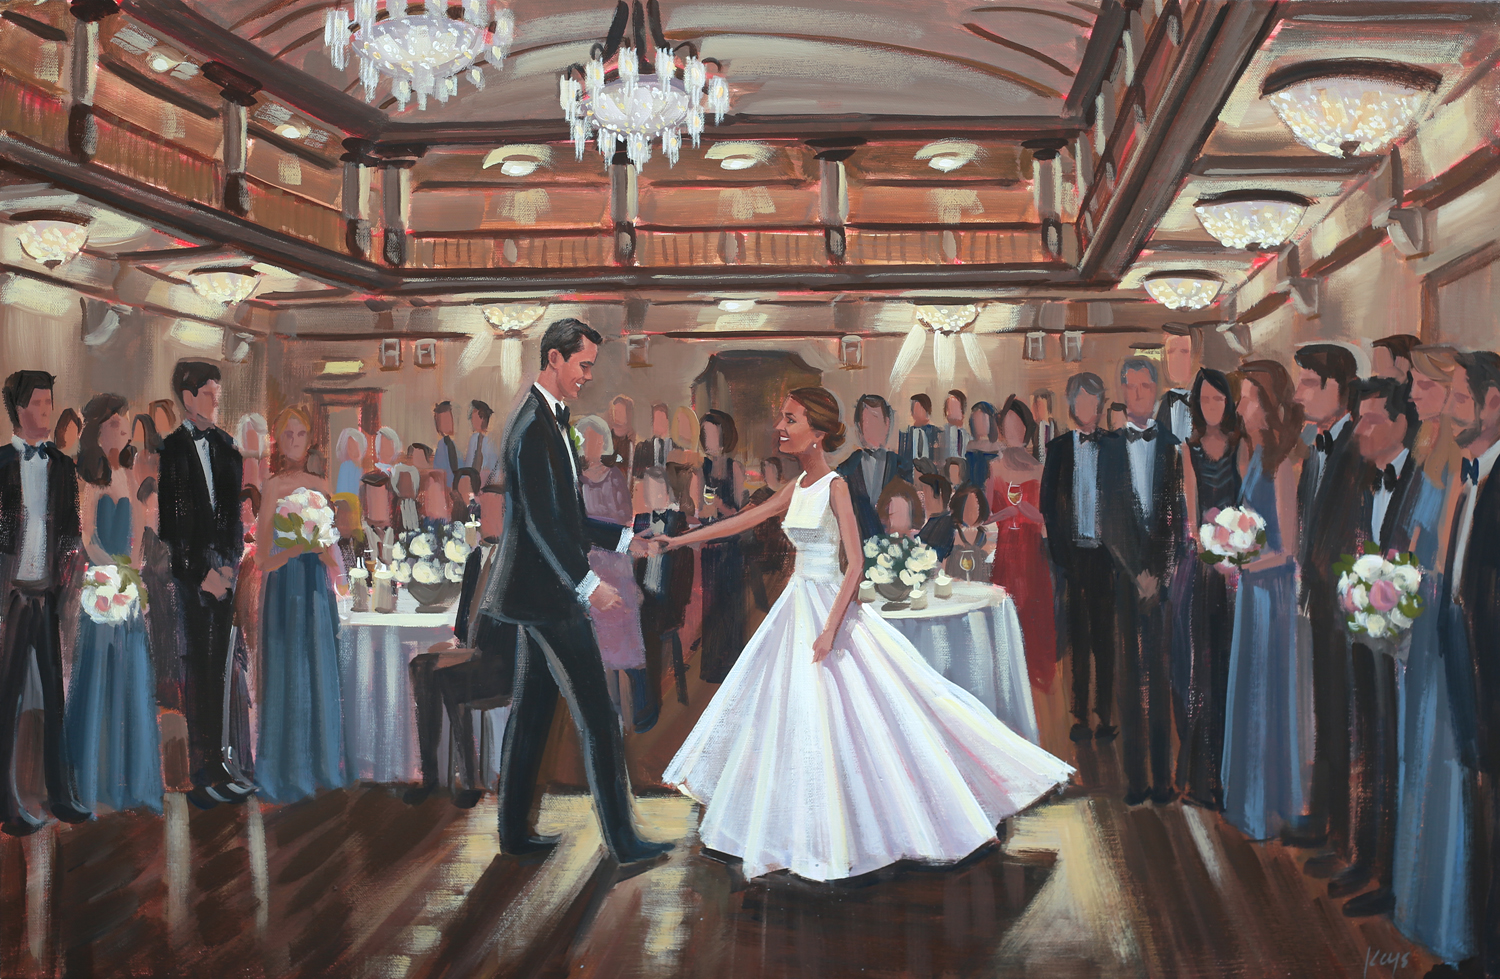 Live wedding painter, Ben Keys, captured Heather + Jake’s dreamy first dance at historic Richmond’s John Marshall Ballrooms.